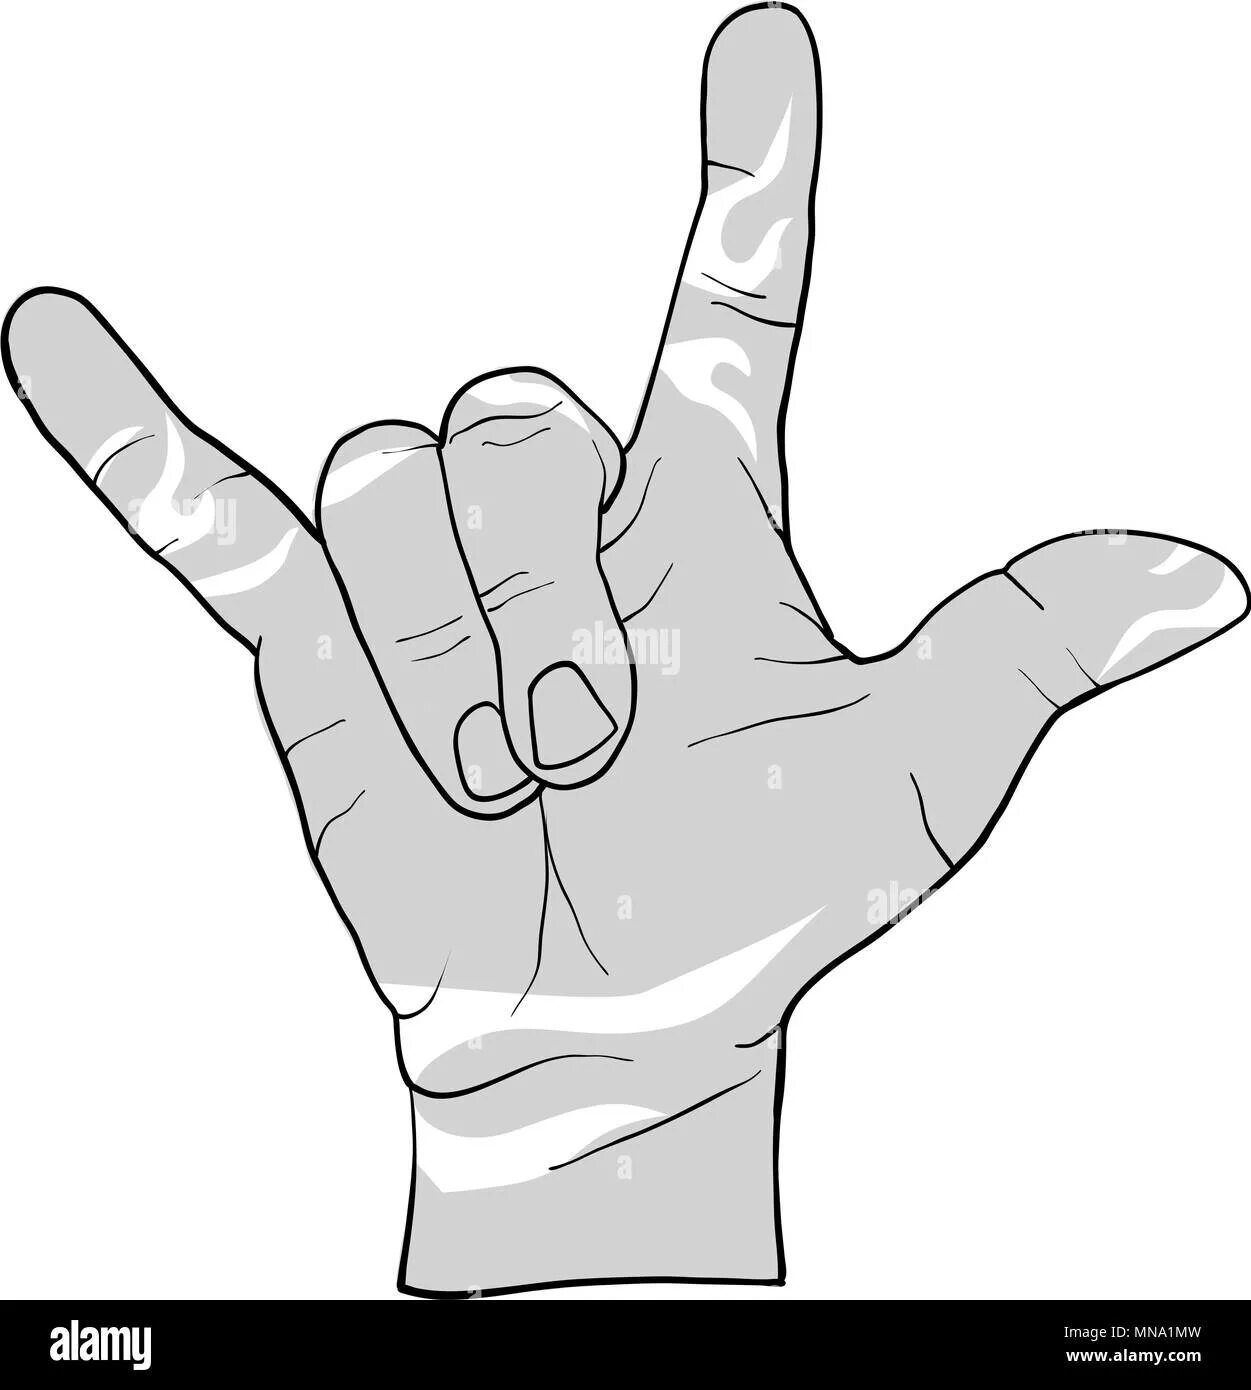 Metal hand. Металлические знаки руками. Знак рока. Рок знак рукой. Жест коза рок.